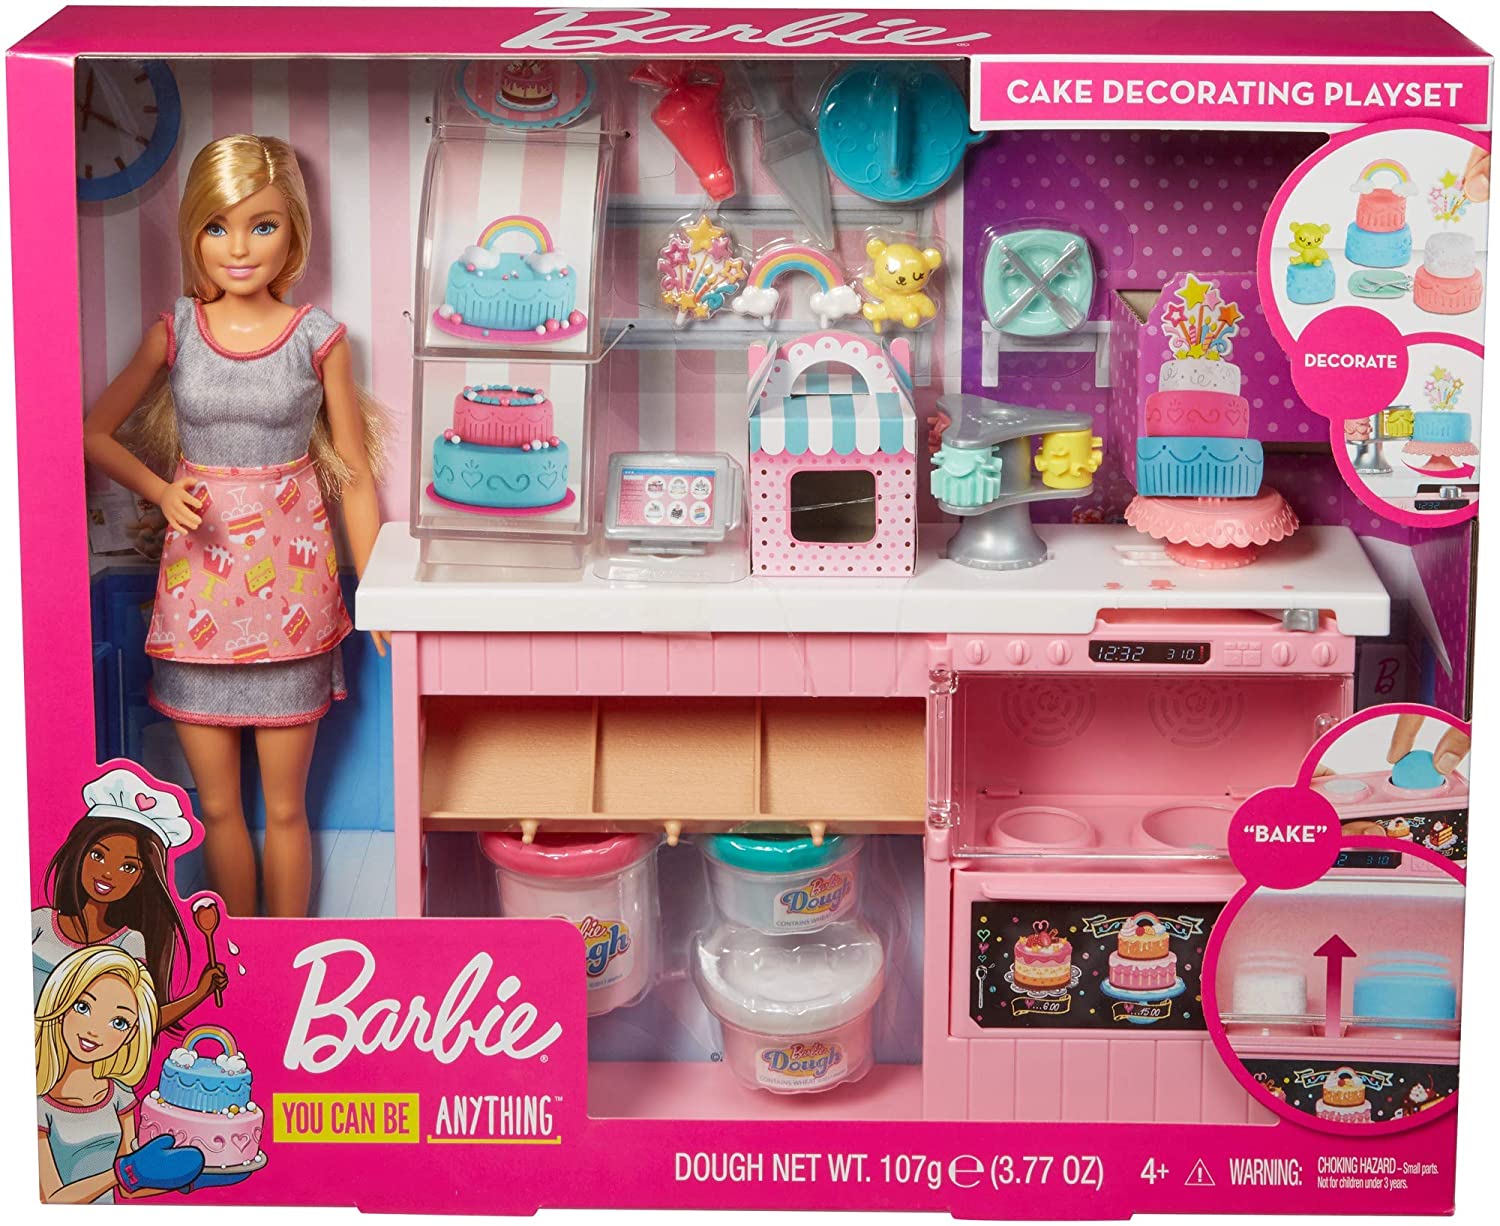 Barbie Made To Move Doll DPP74